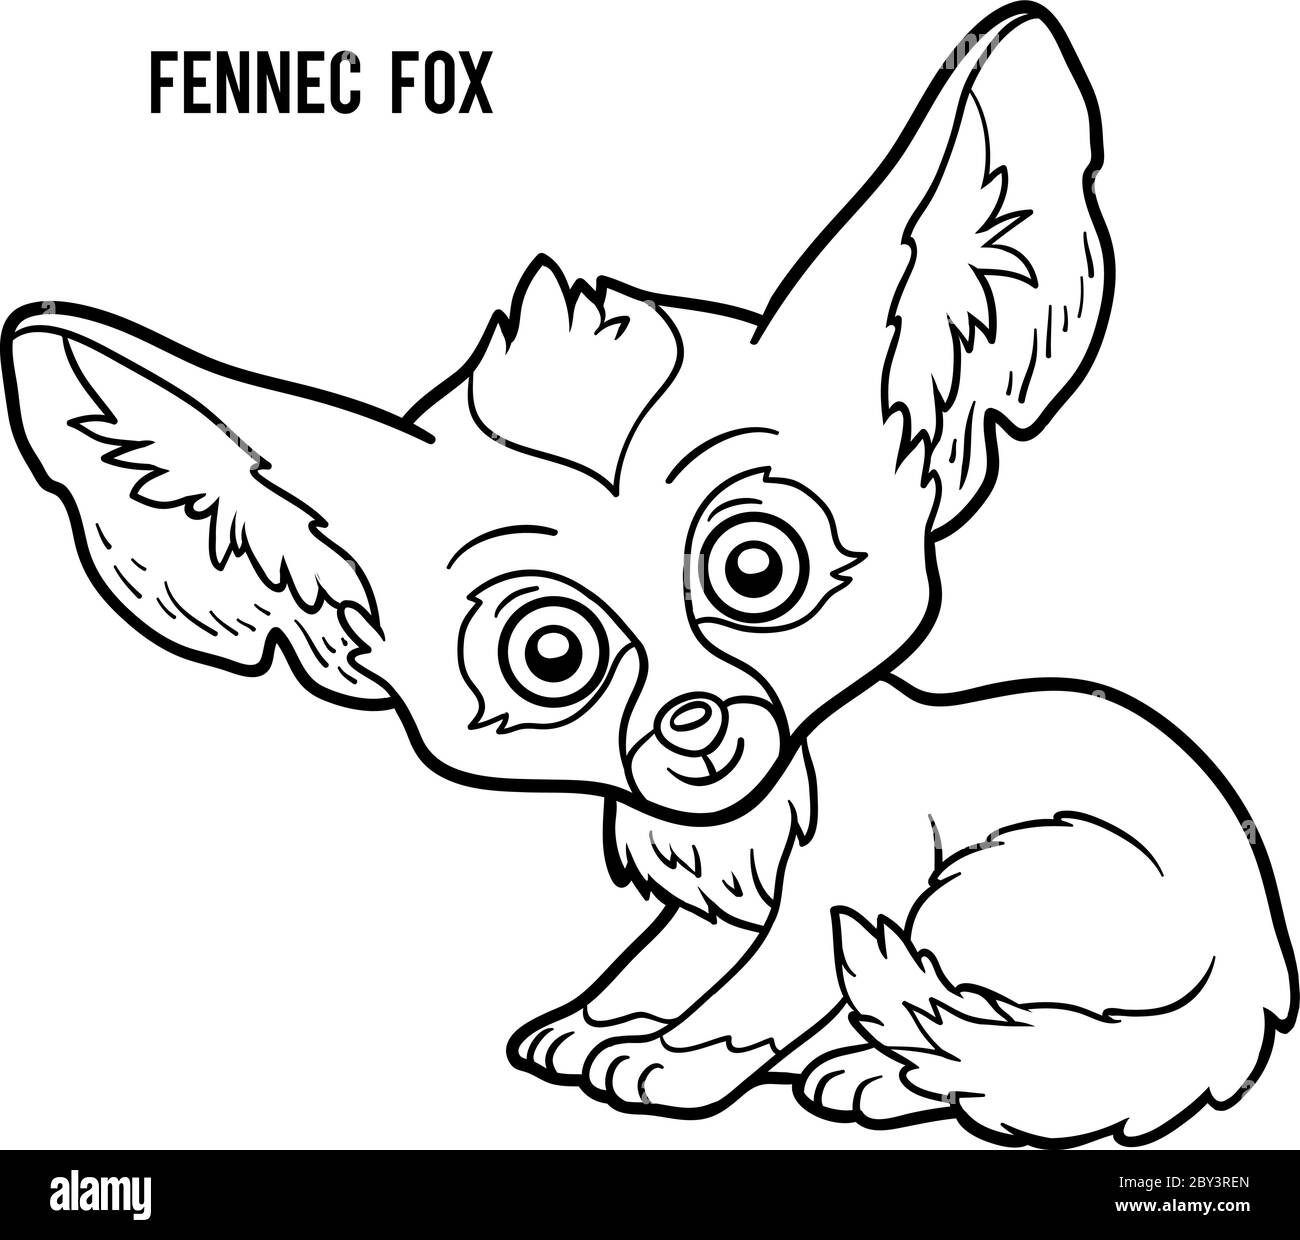 Coloring book for children, Fennec fox Stock Vector